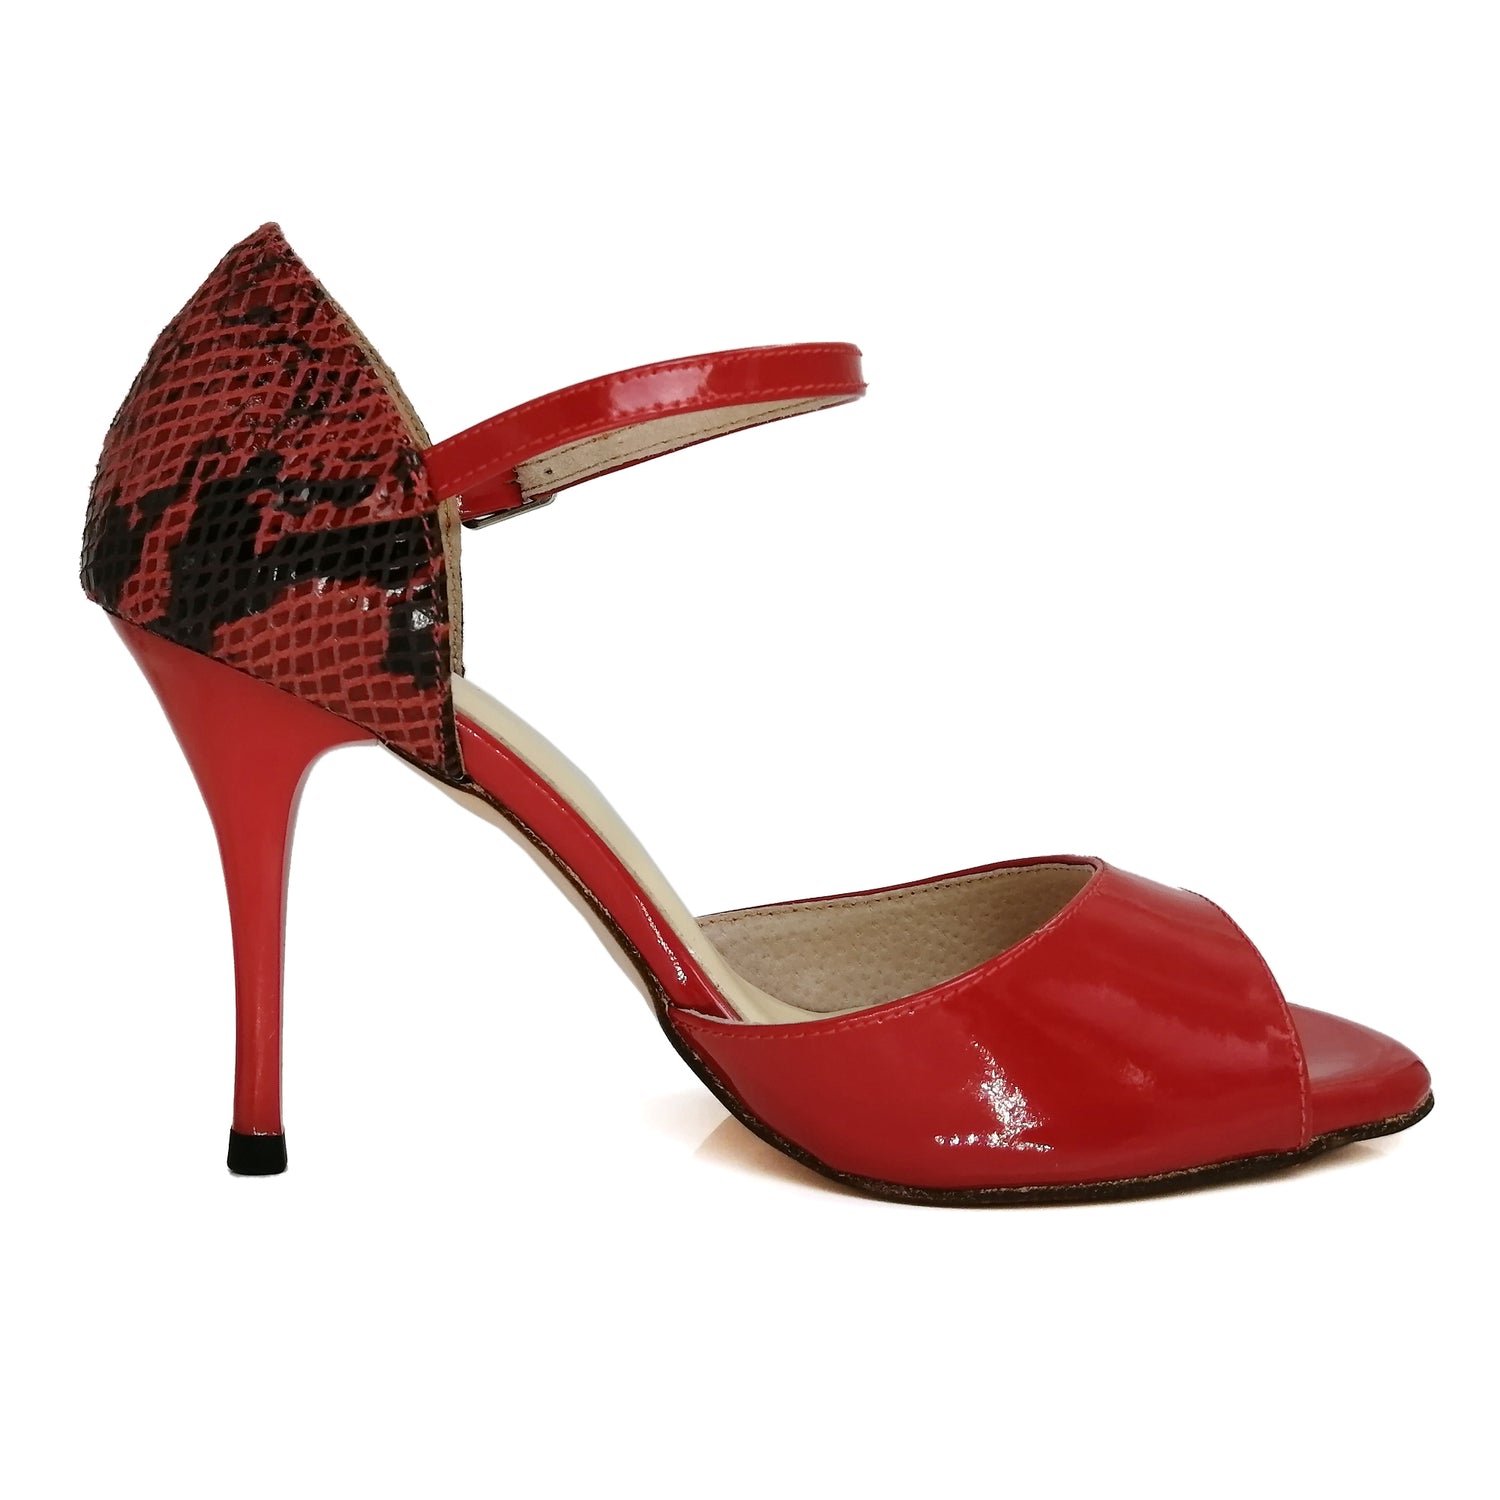 Pro Dancer red leather high heels Argentine Tango dance sandals1